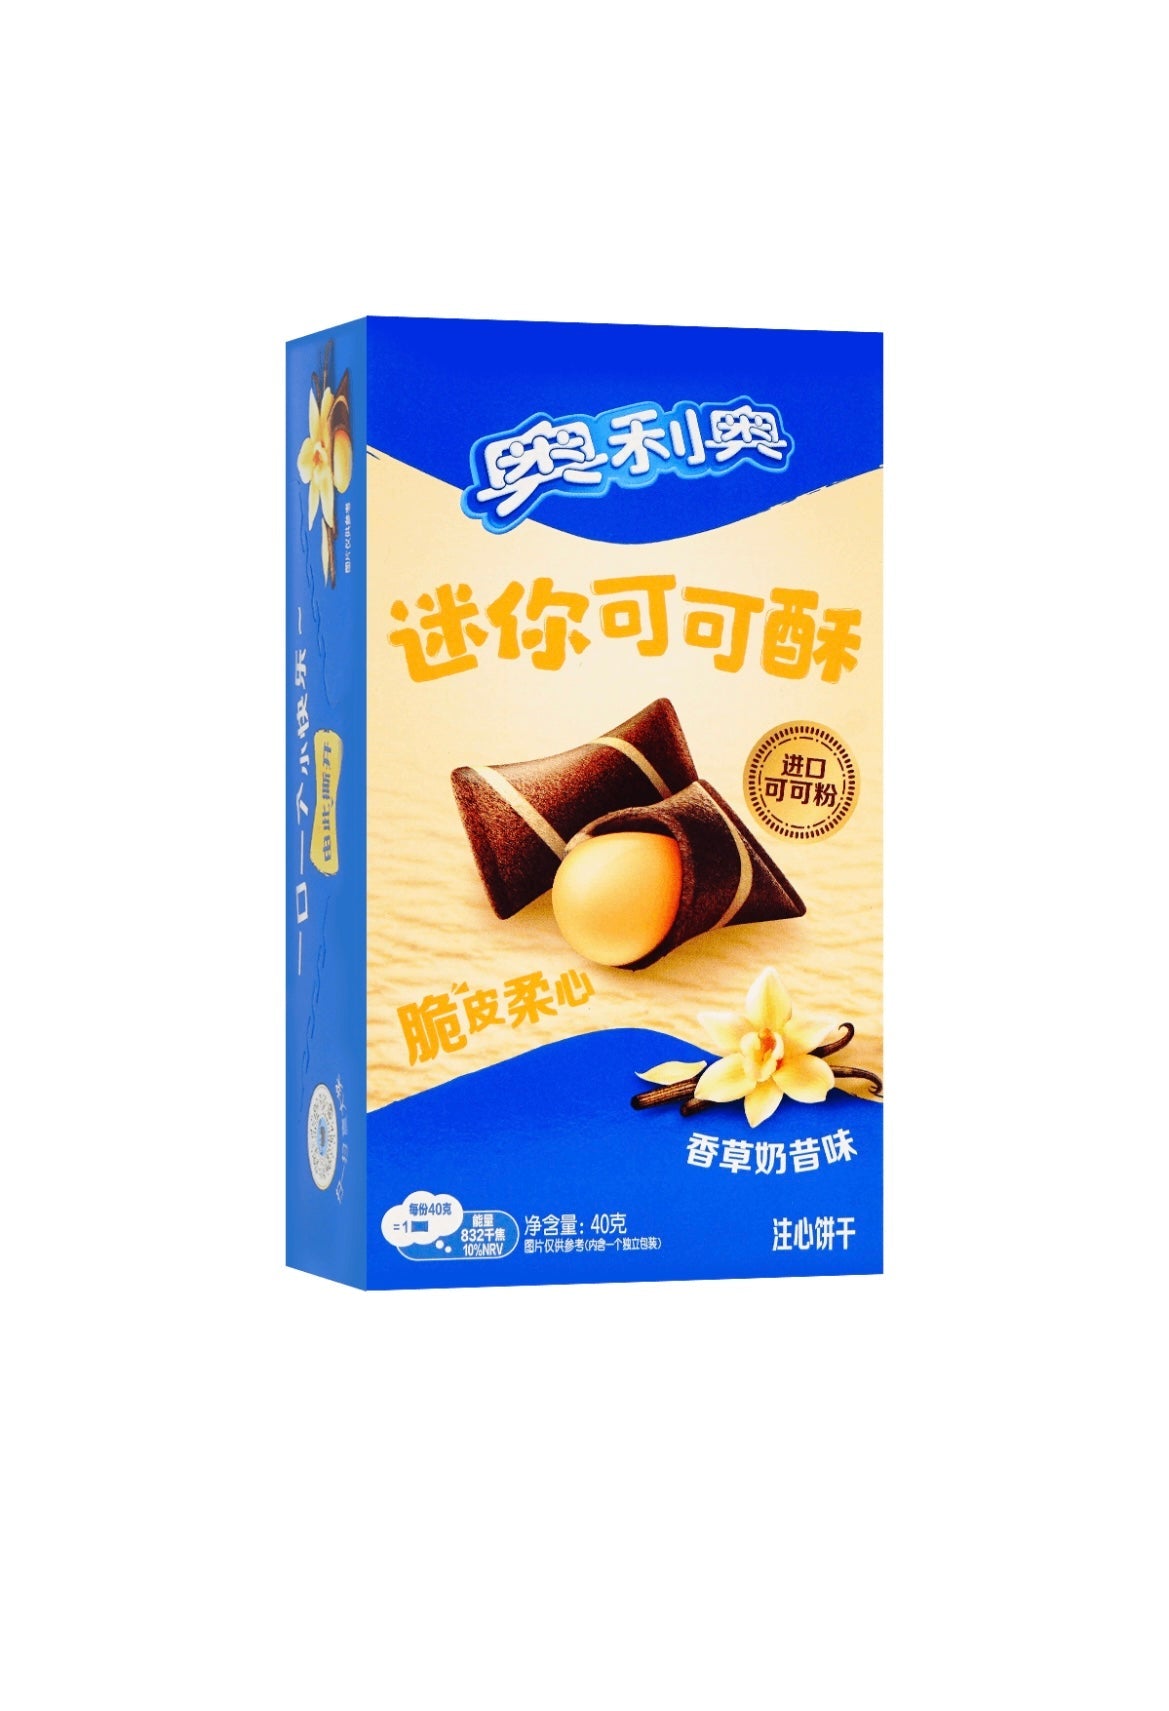 Oreo Crunchy Cocoa Vanilla milkshake 40g (24 pack) A29